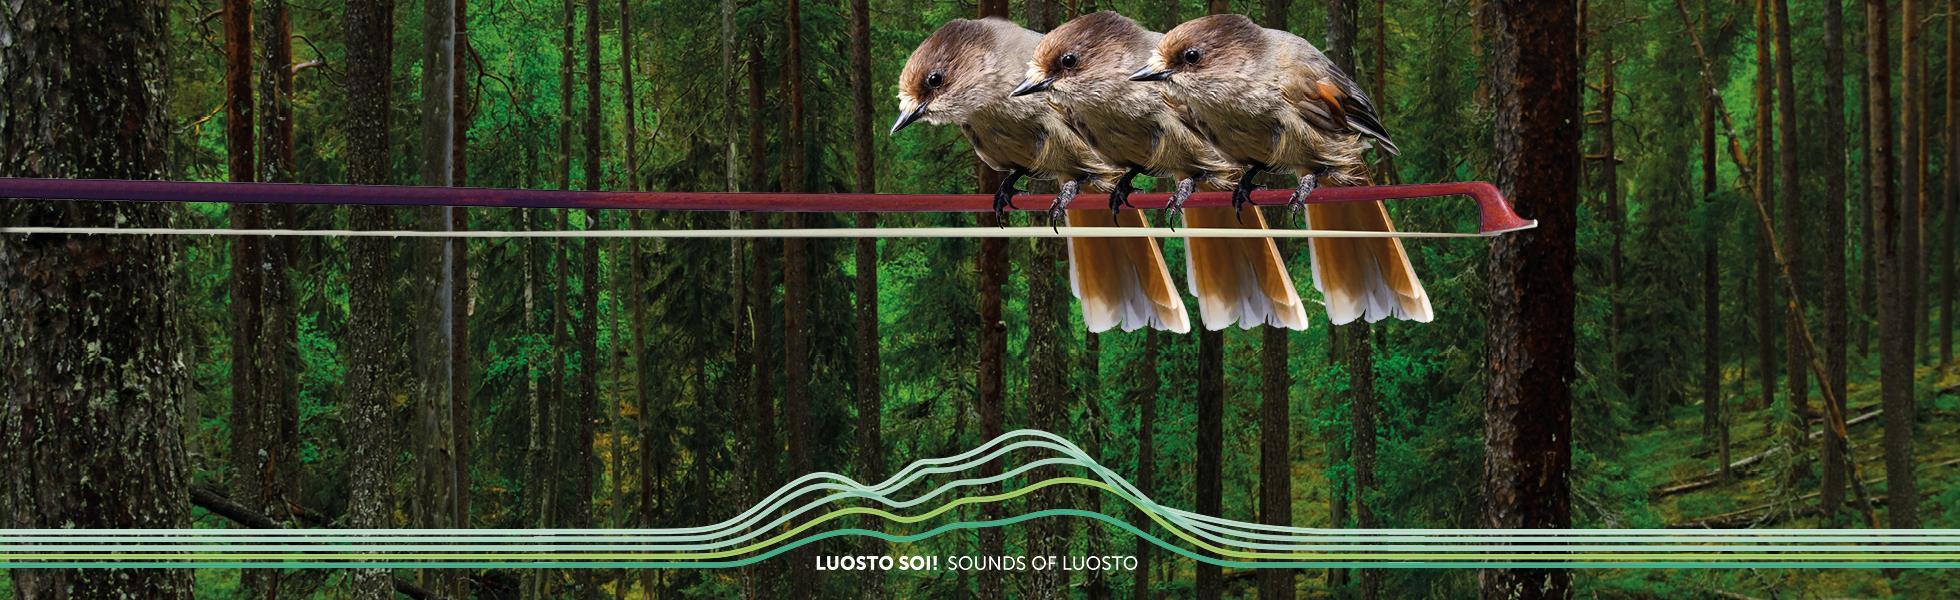 Sounds of Luosto 2021 Program Celebrate nature